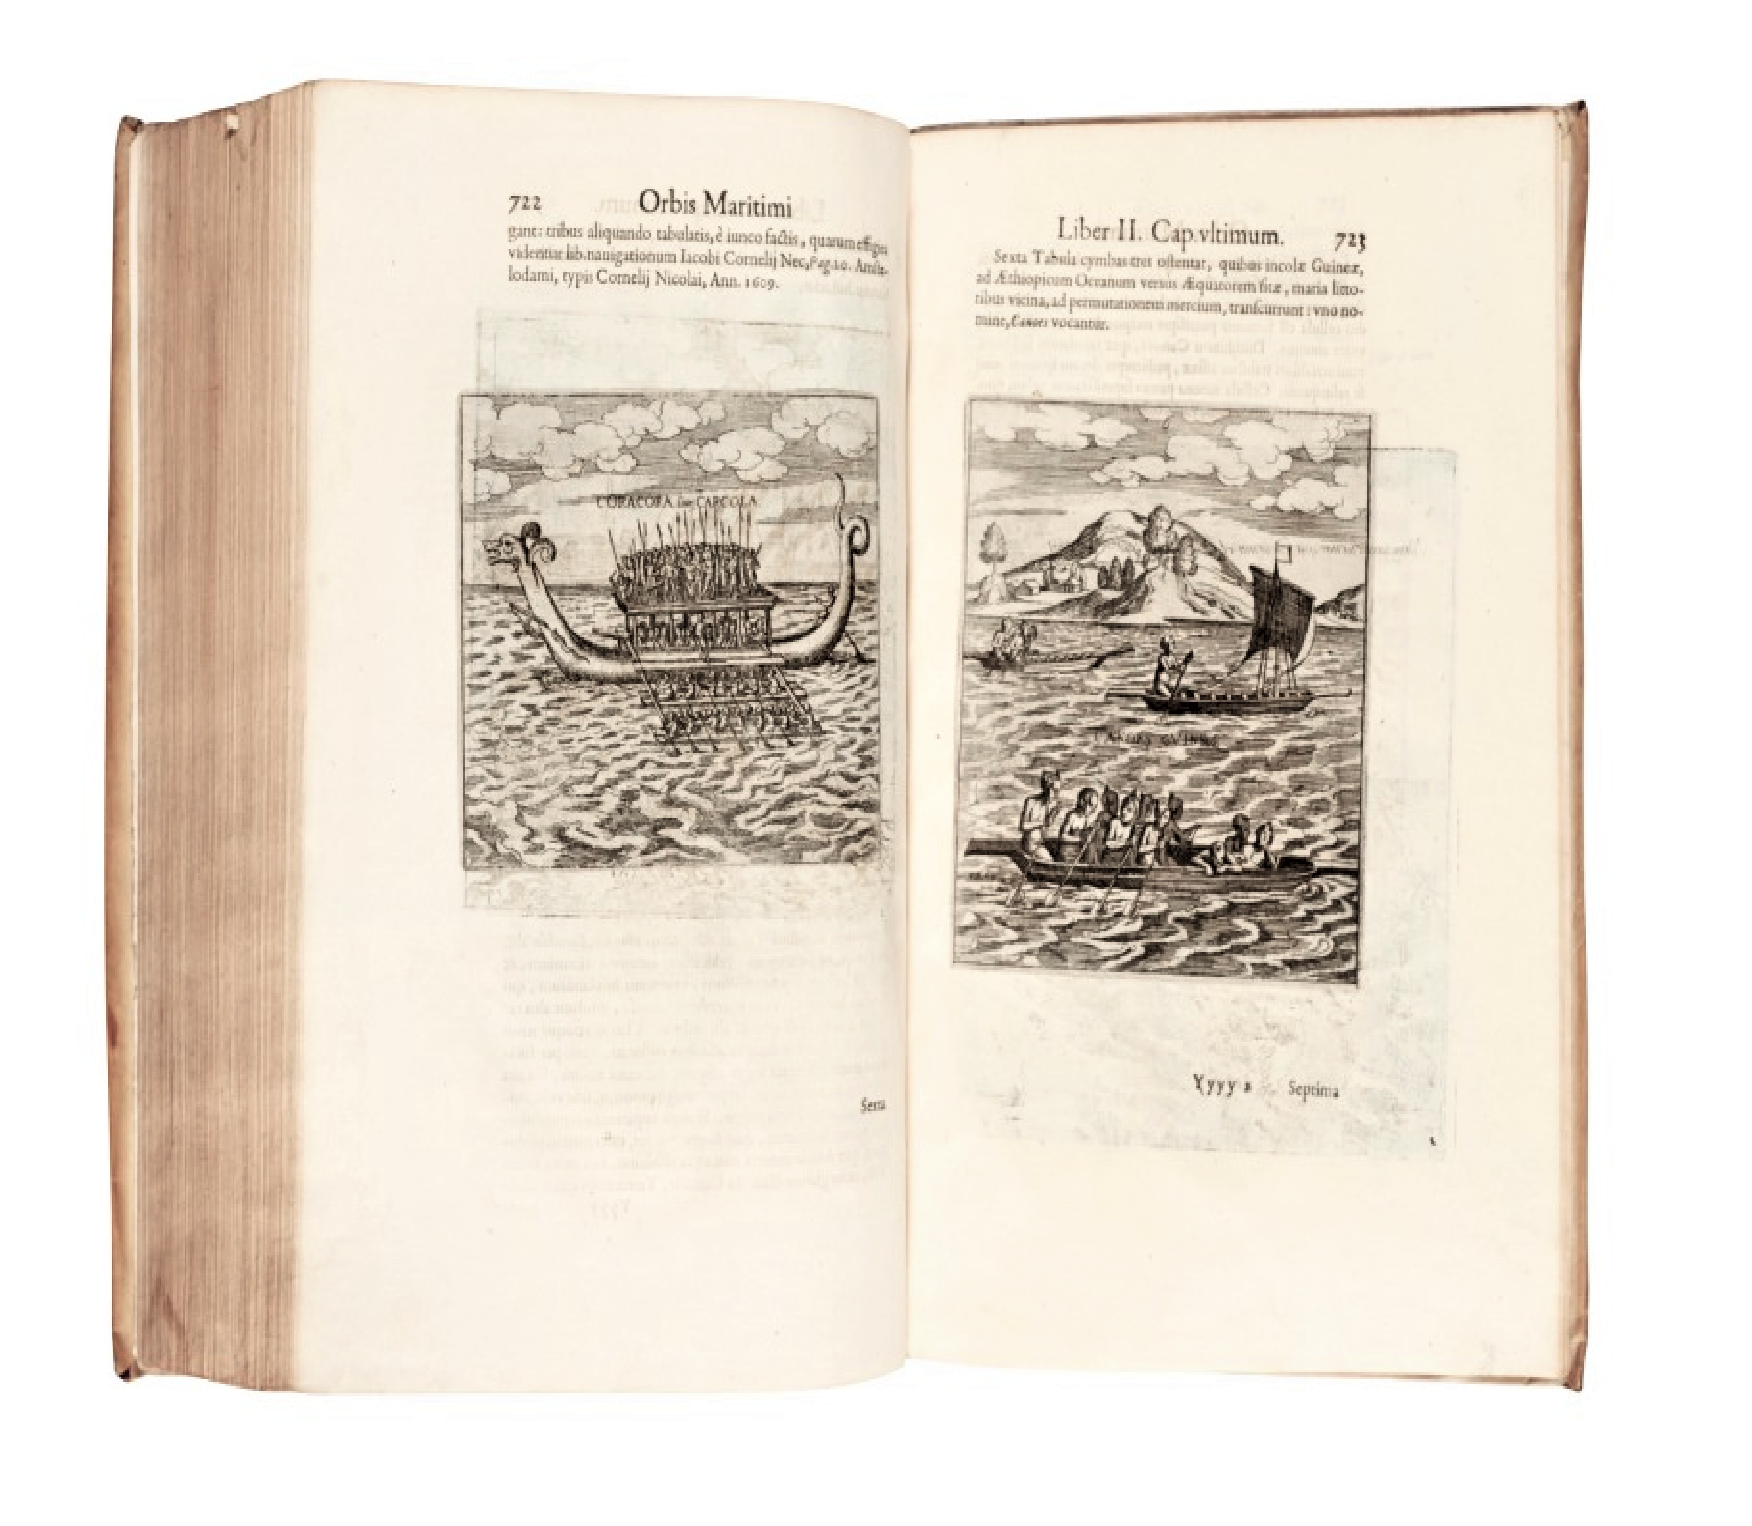 MORISOT, CLAUDE BARTHELEMY: ORBIS MARITIMI SIVE RERUM IN MARI ET LITTORIBUS GESTARUM GENERALIS HISTORIA 1643 First Naval History